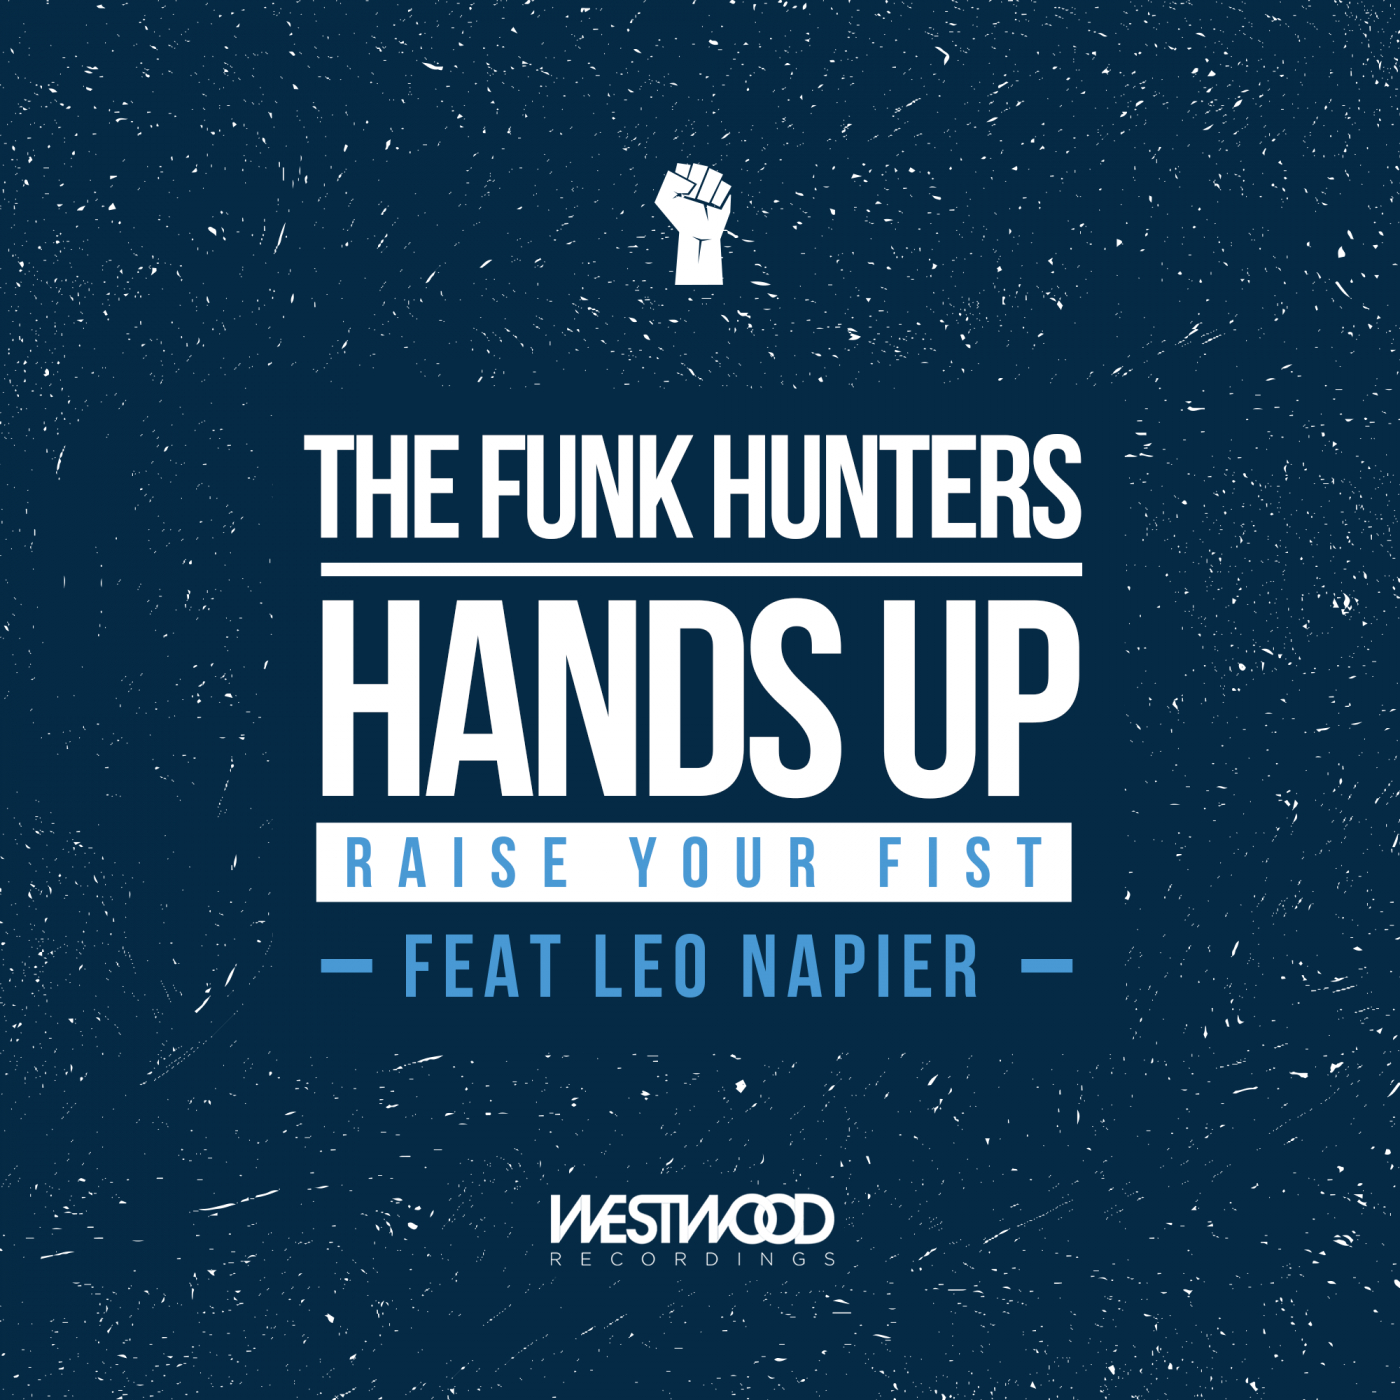 The Funk Hunters - Hands Up Raise Your Fist feat. Leo Napier